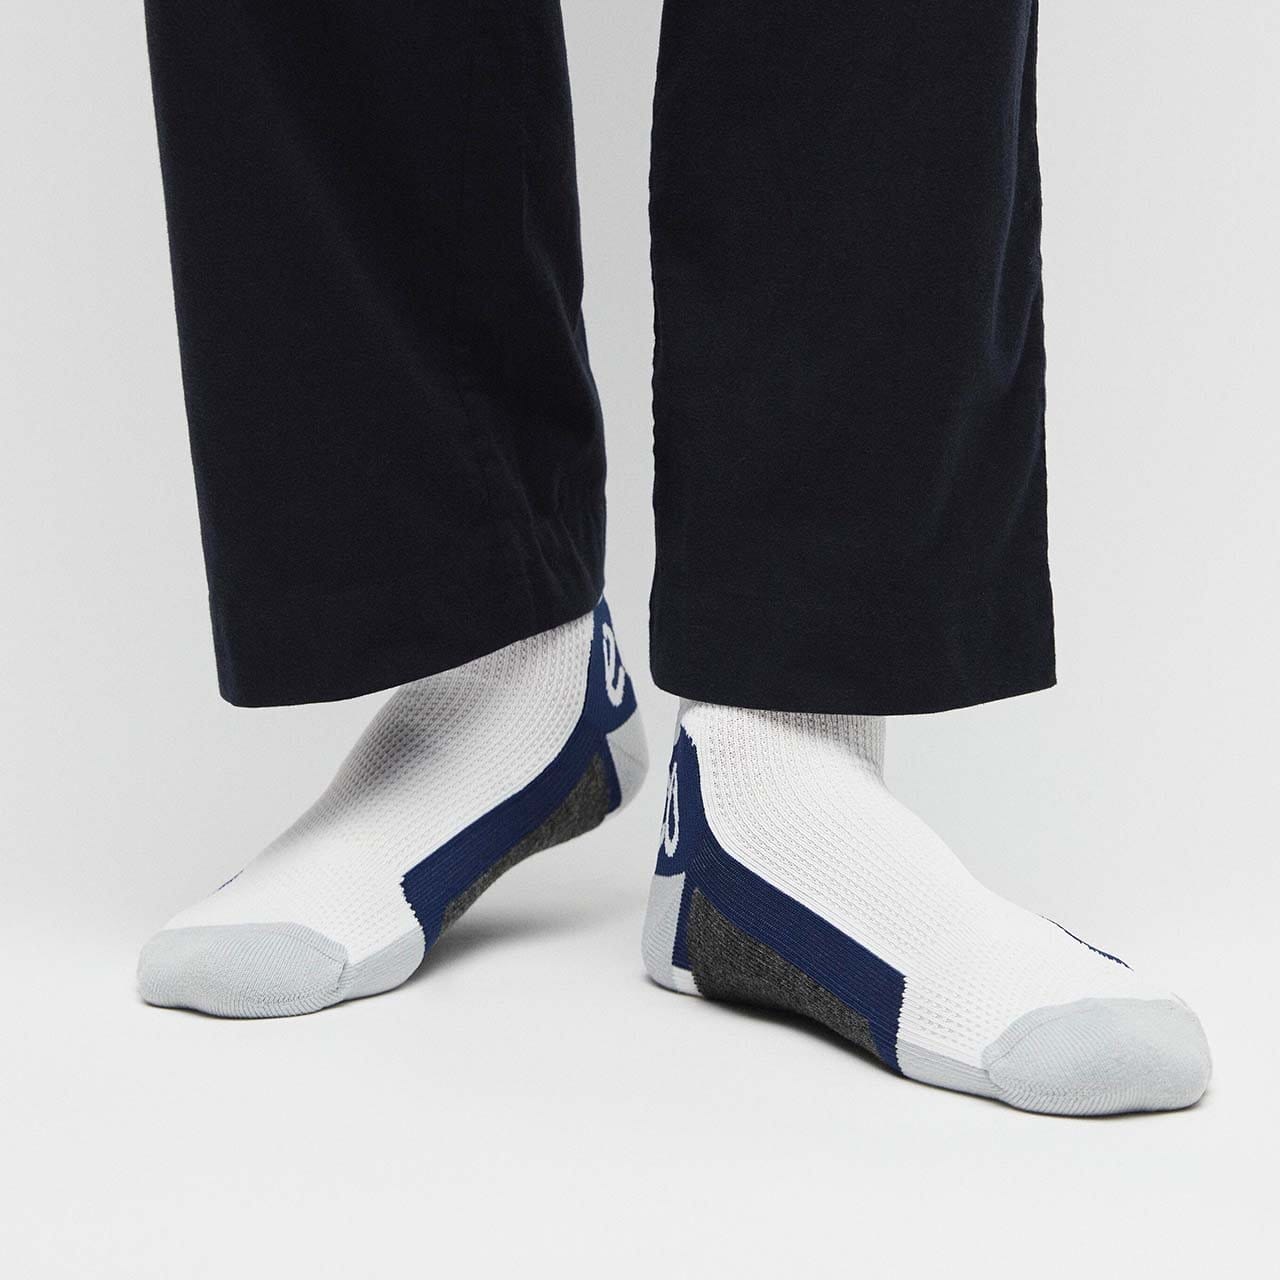 Man wearing white and blue socks